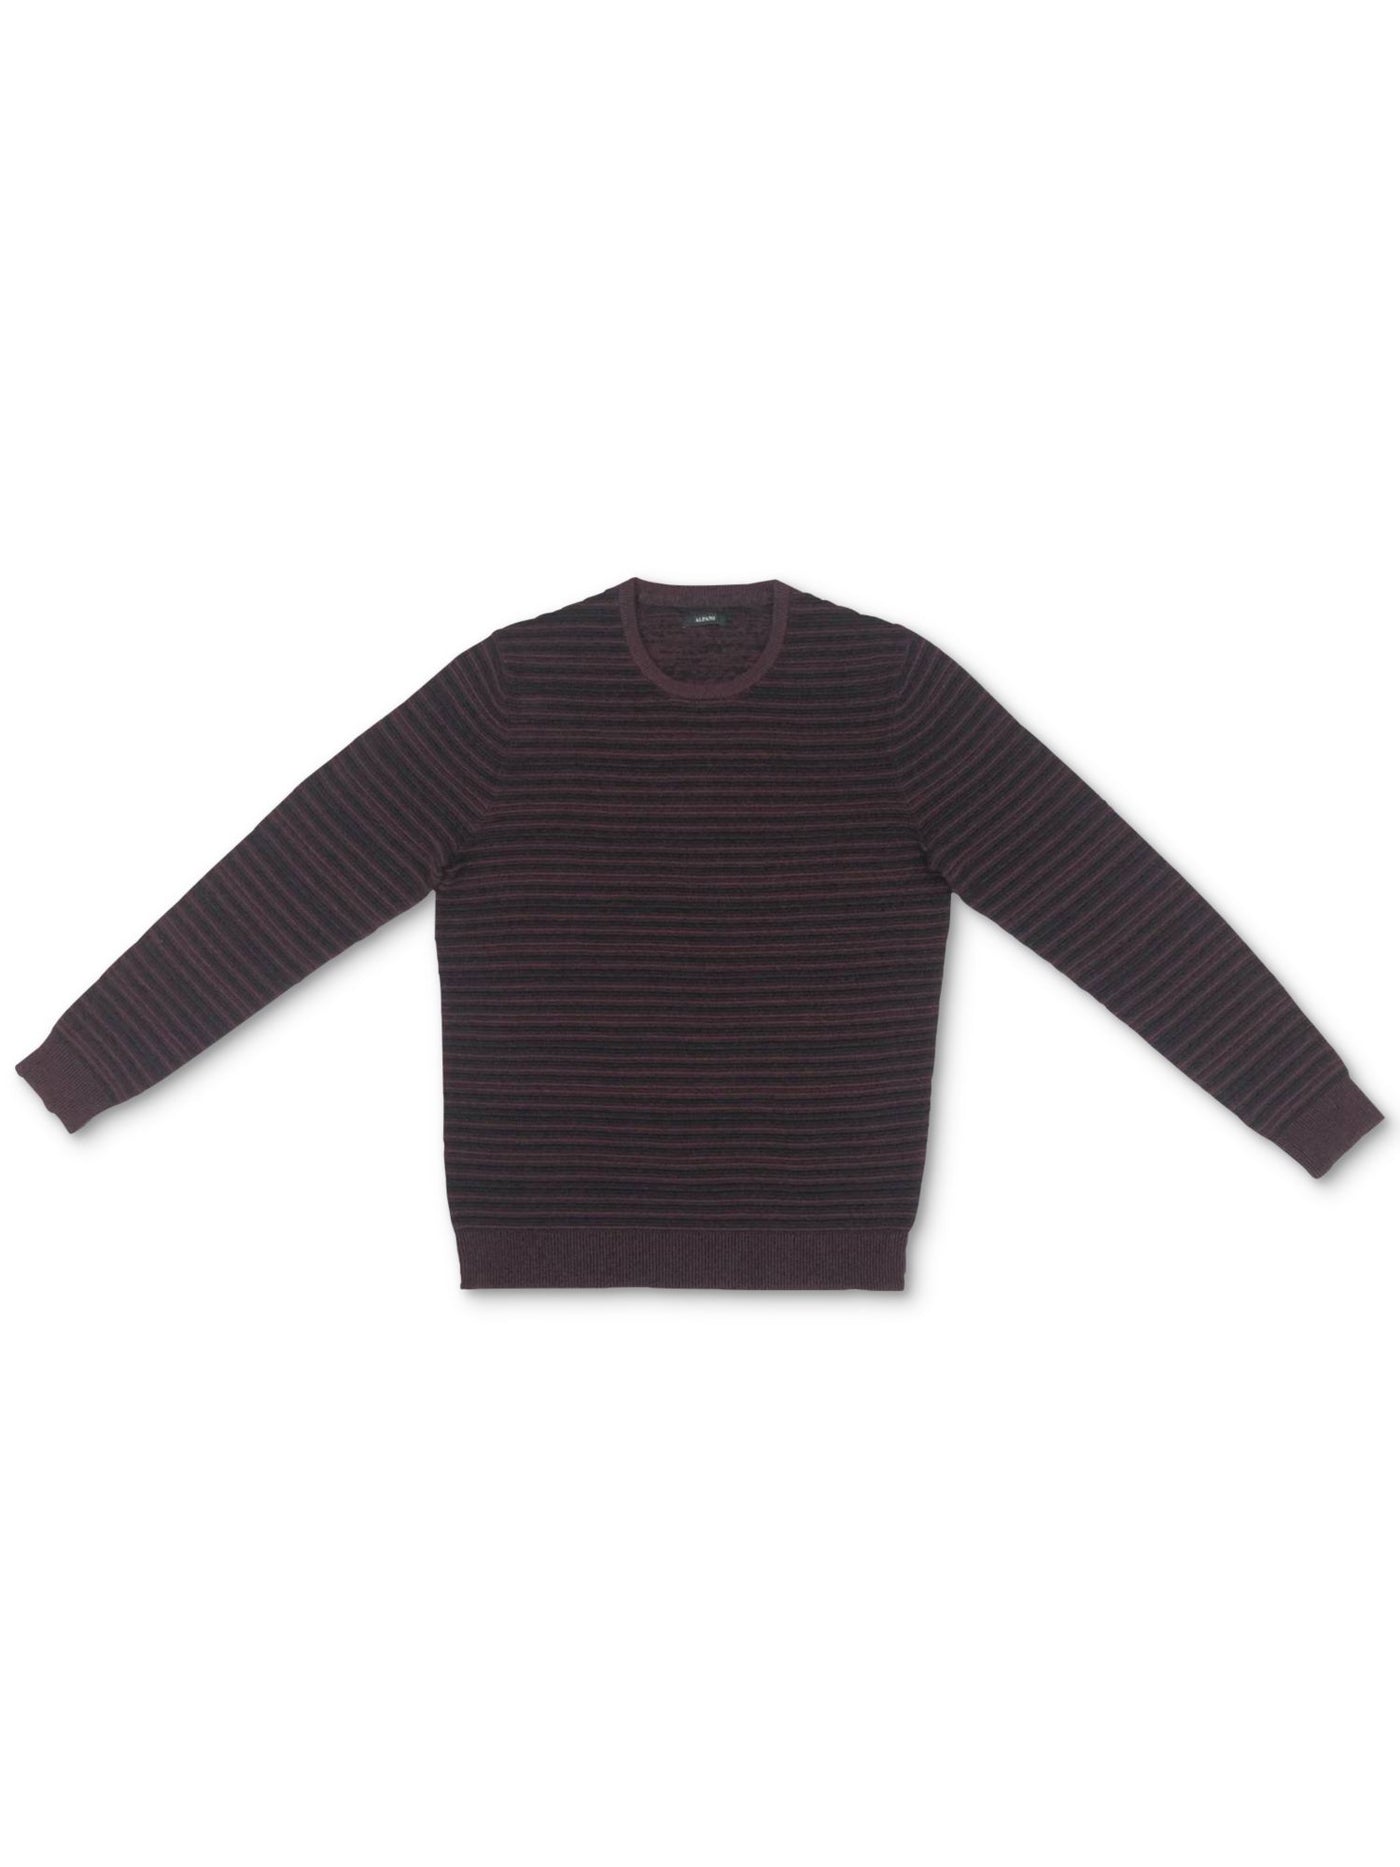 ALFANI Mens Burgundy Striped Classic Fit Cotton Pullover Sweater XL